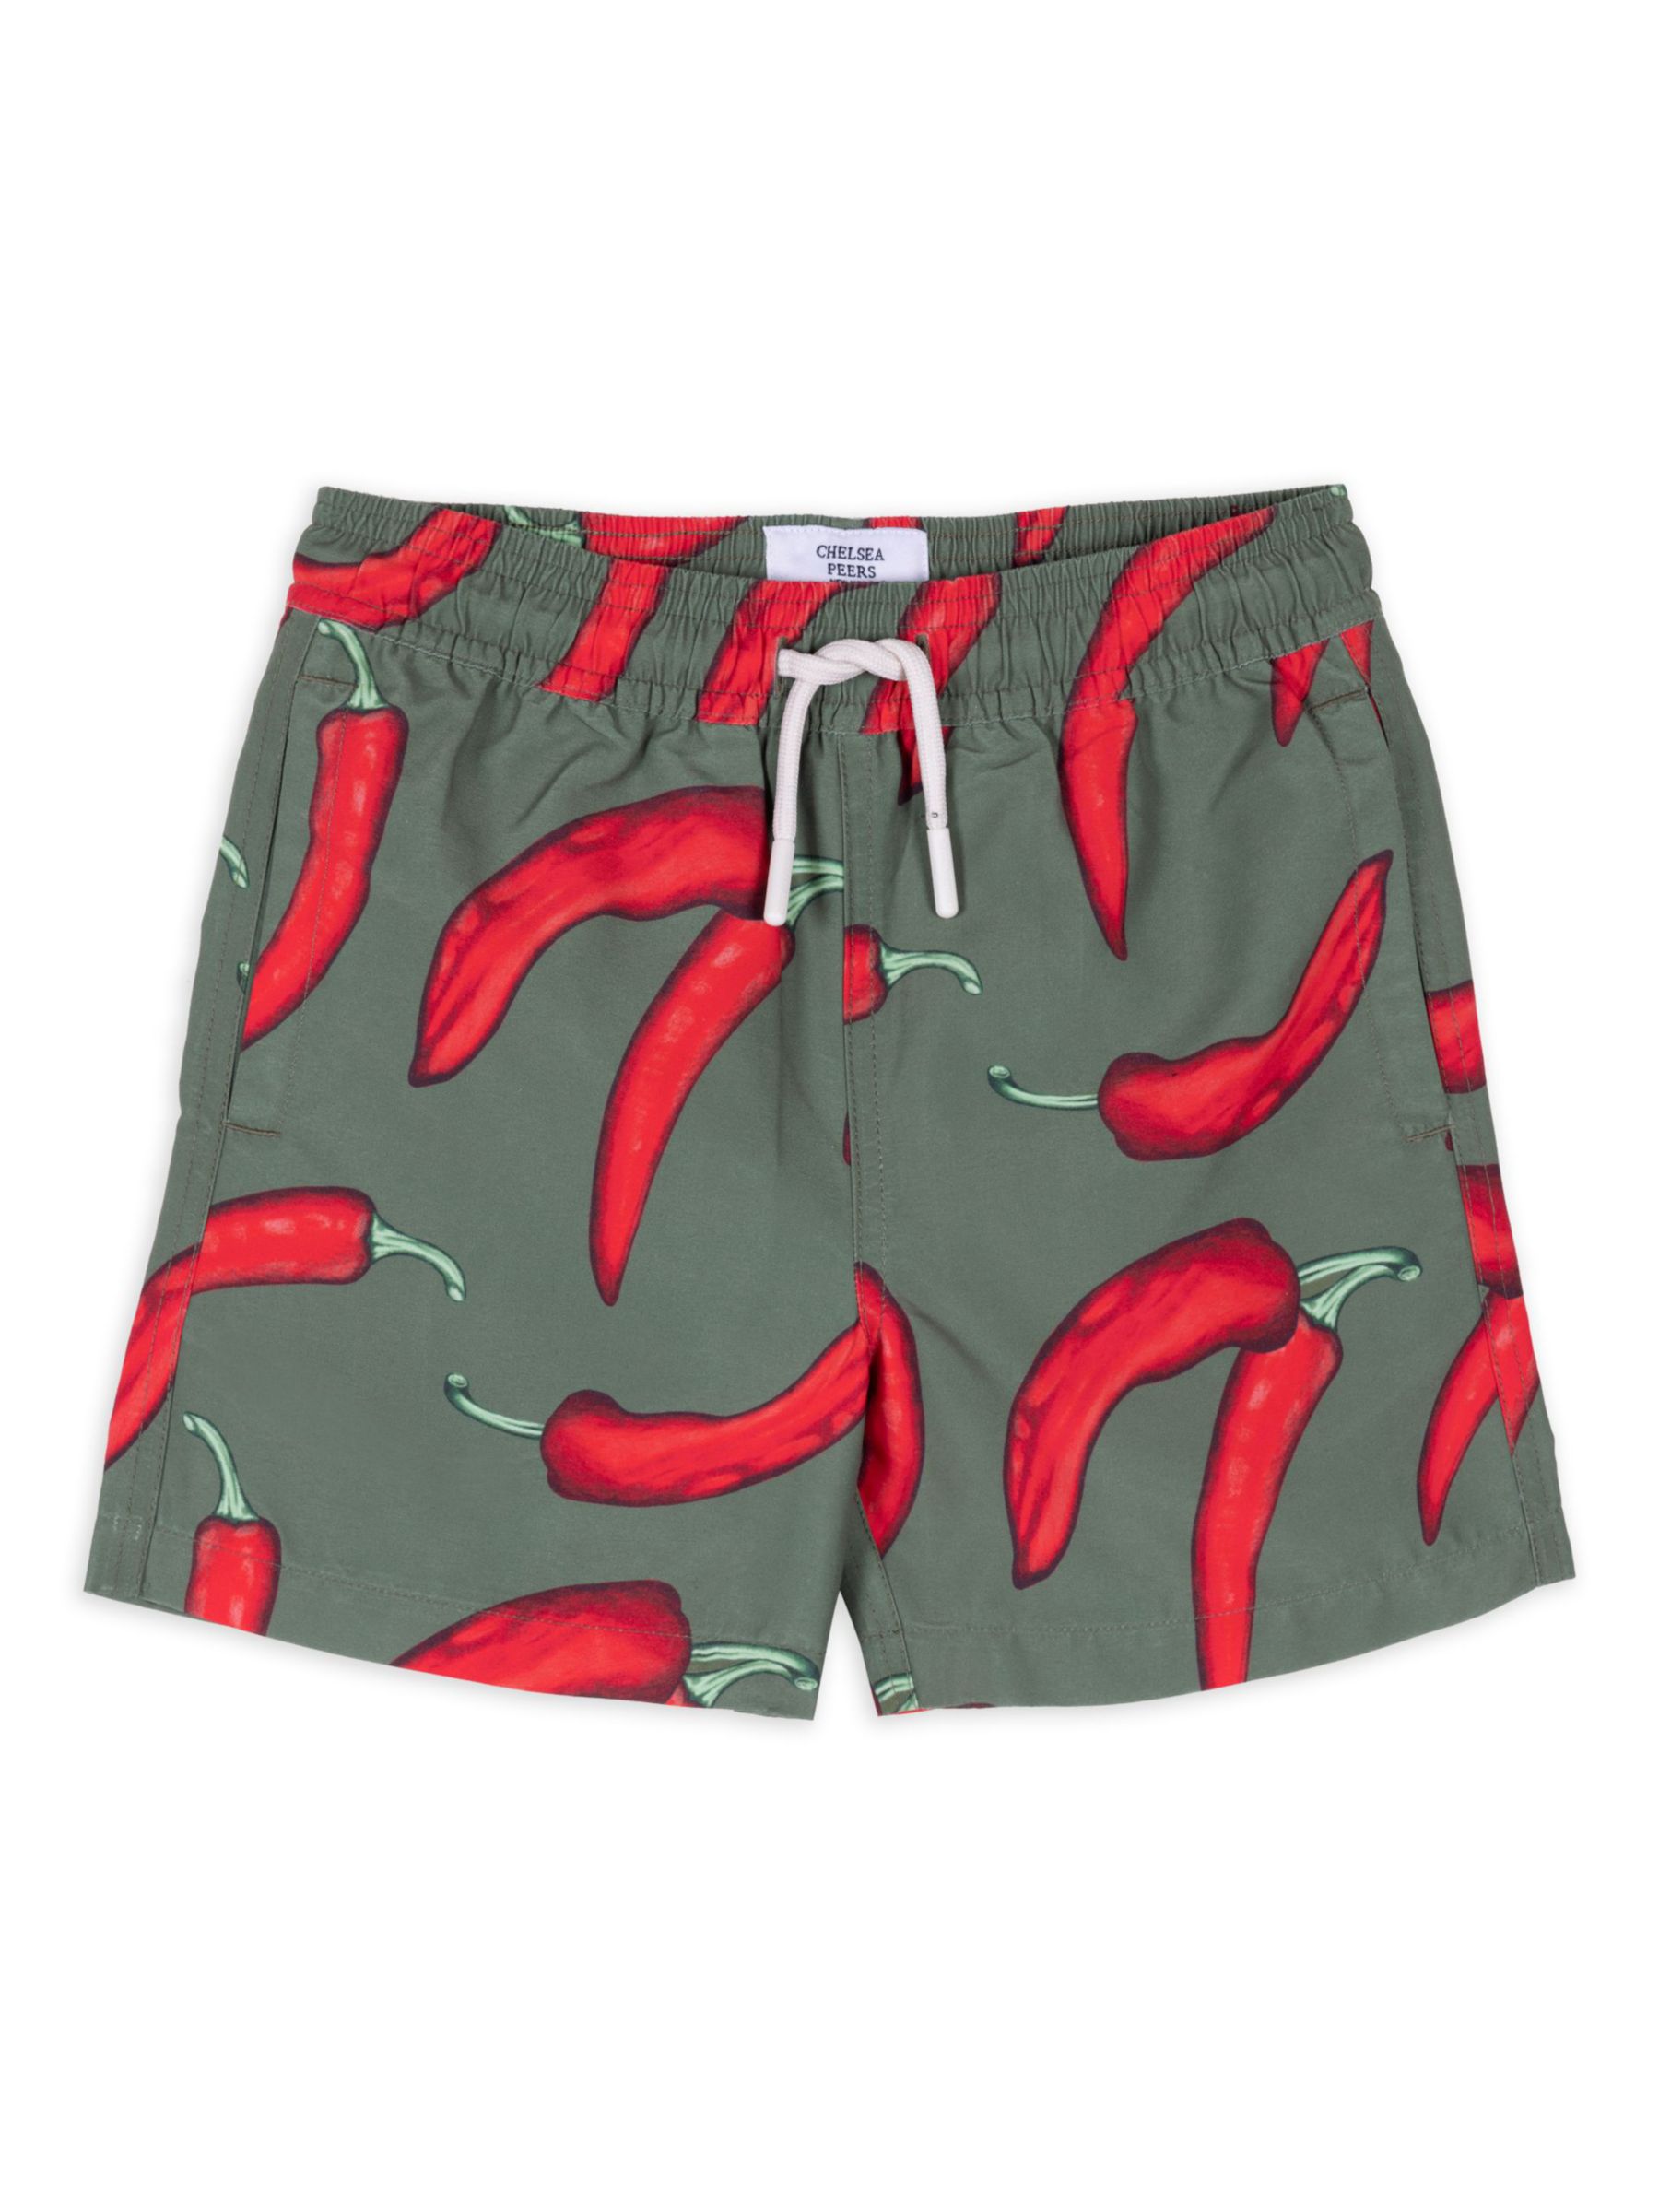 Chelsea Peers Kids' Chilli Pepper Print Swim Shorts, Khaki/Red, 1-2 years